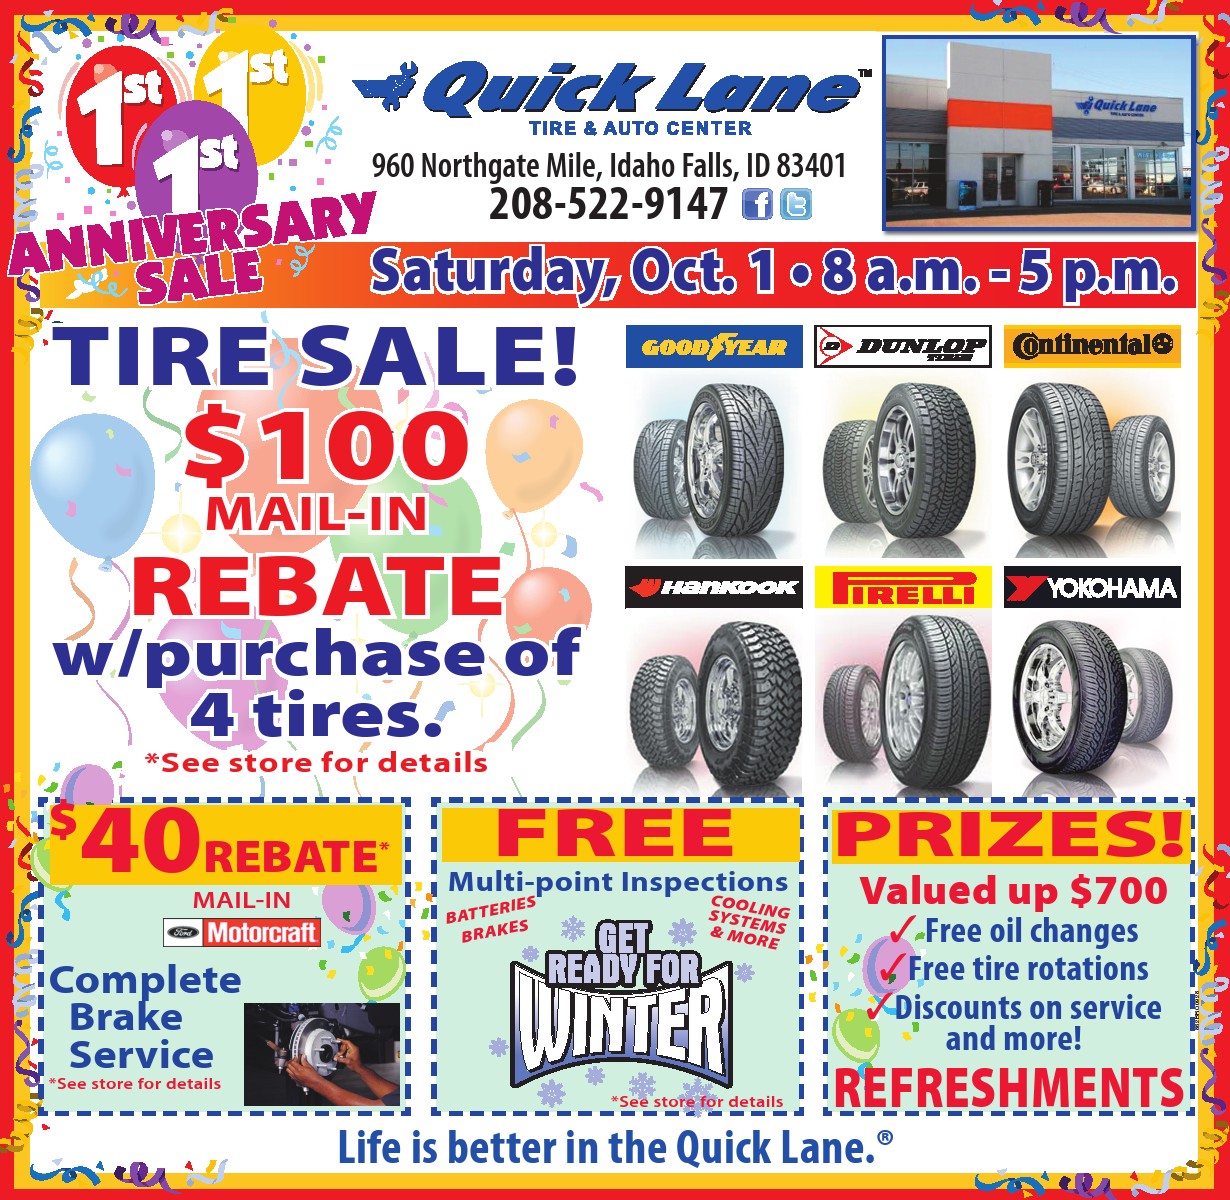 Quick Lane Tire And Auto Center Quick Lane 1 Year Anniversary